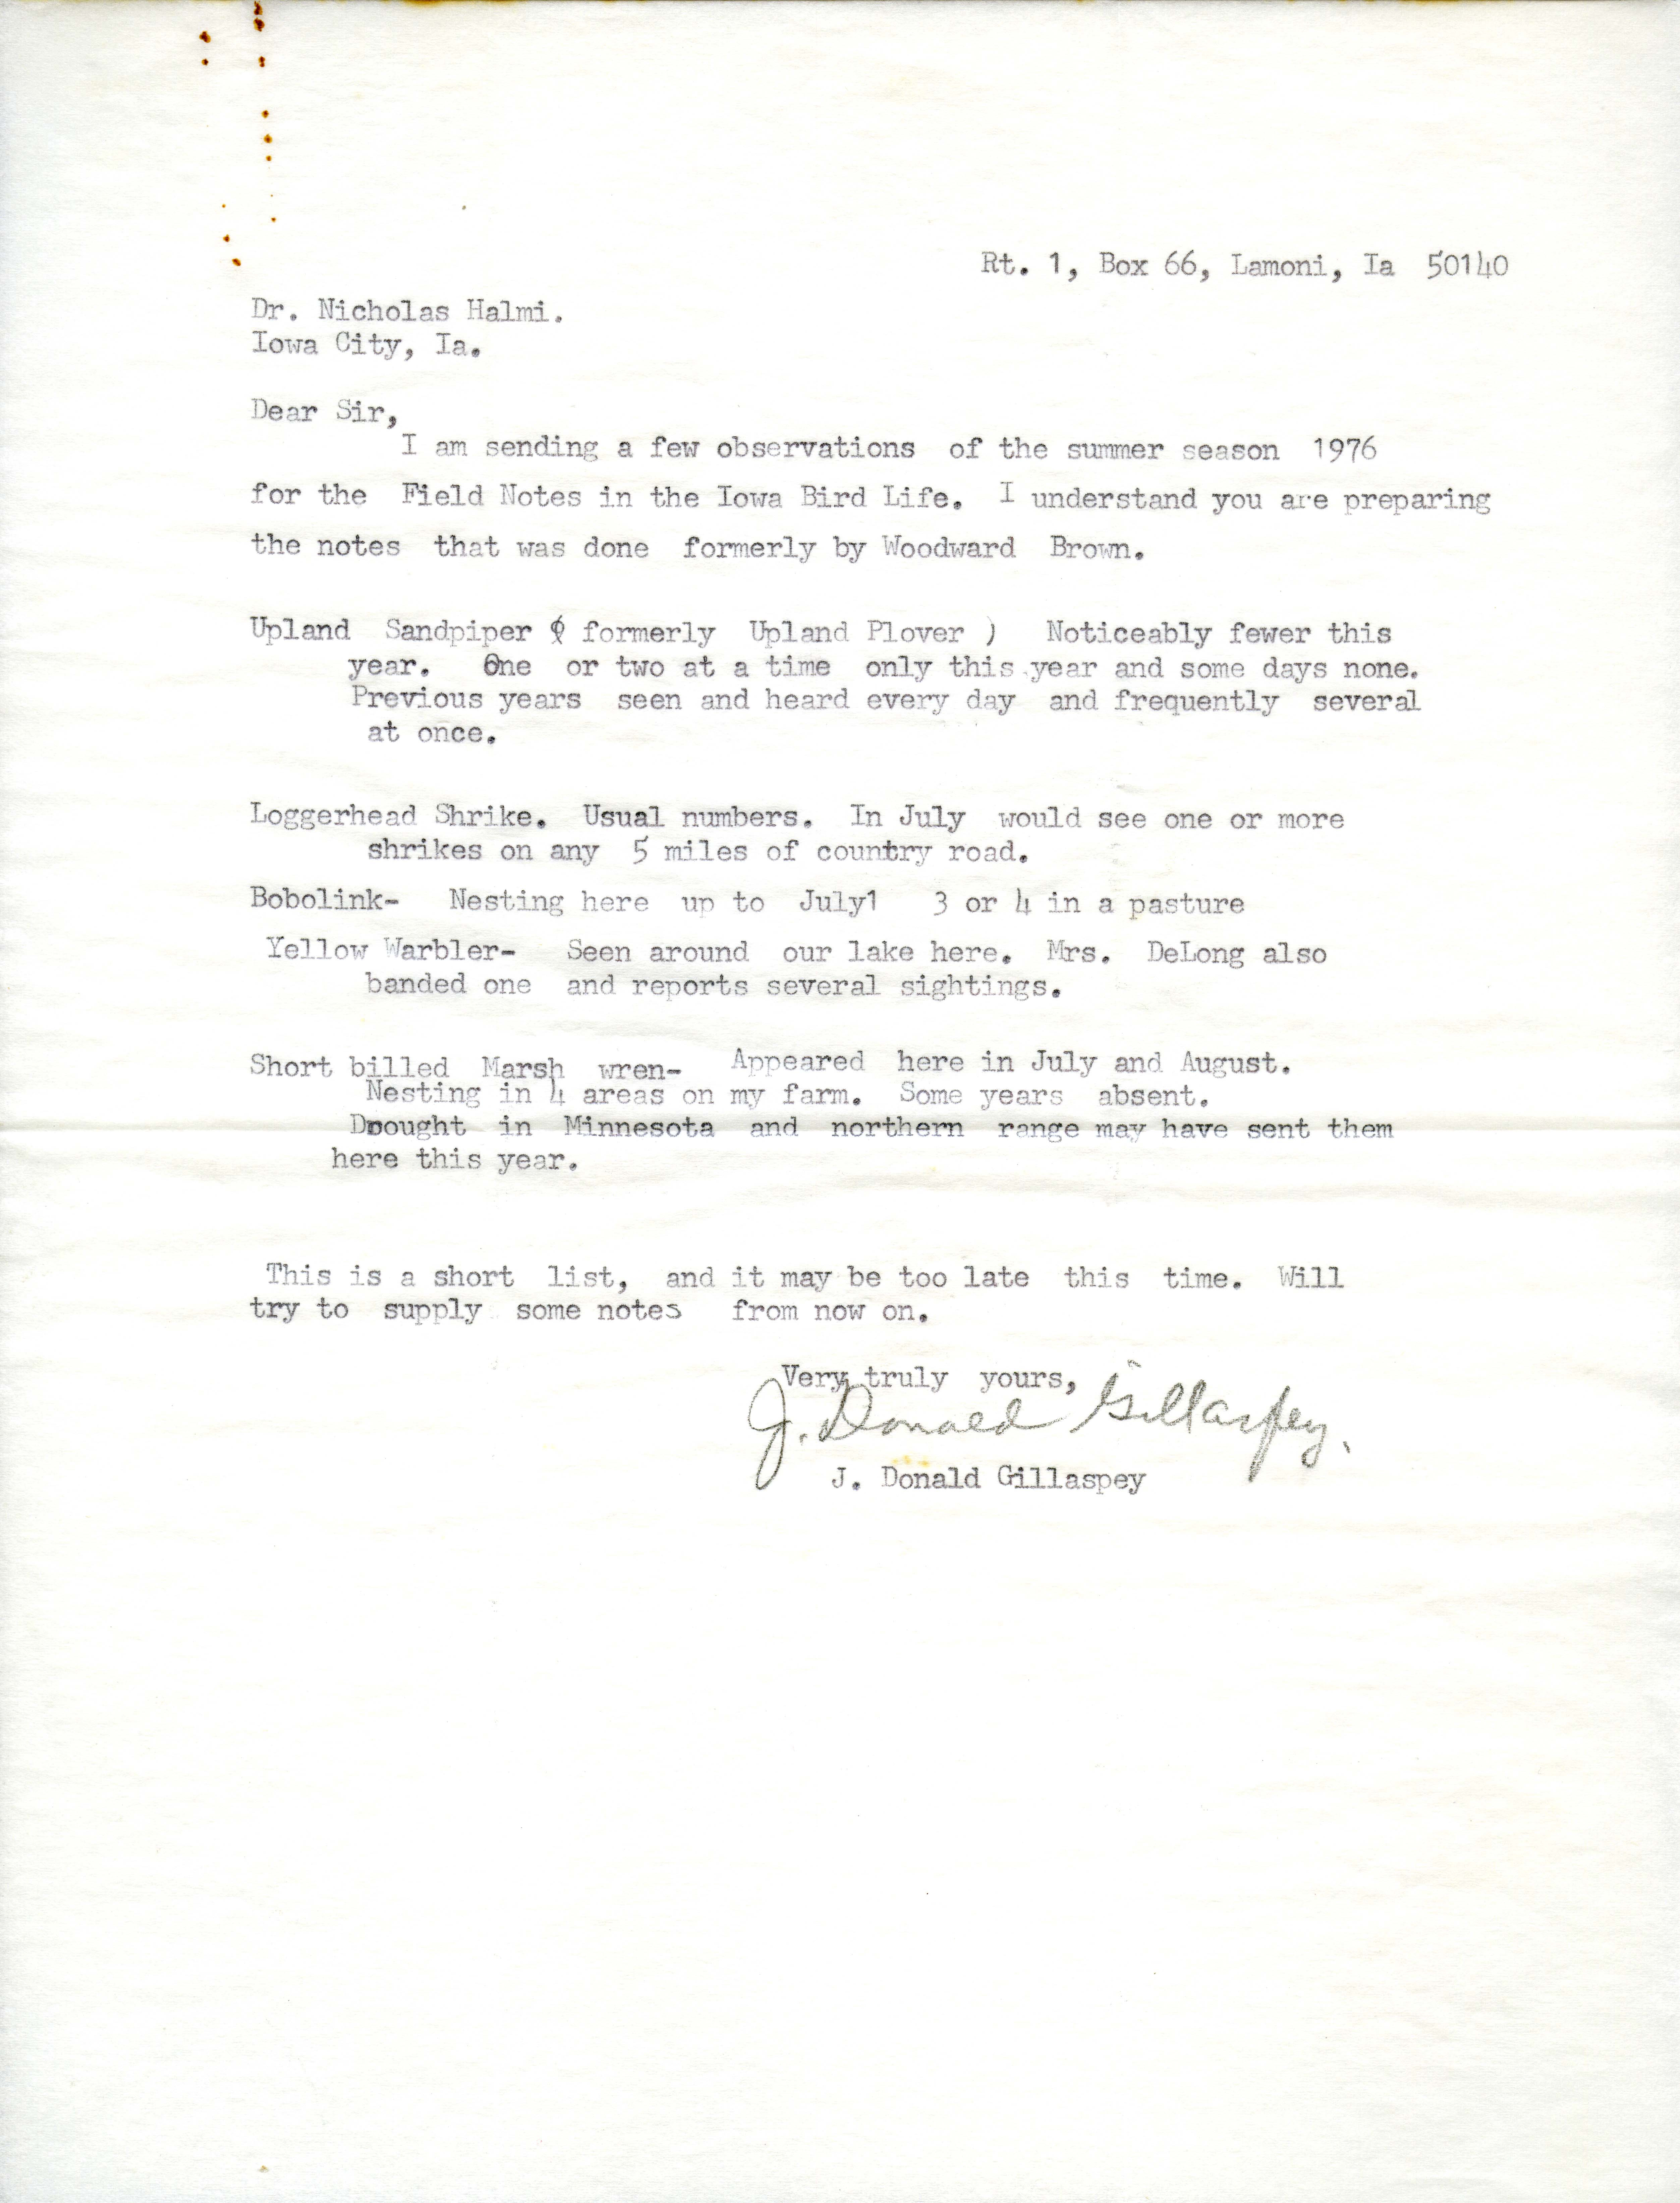 Letter from J. Donald Gillaspey to Nicholas Halmi regarding bird sightings